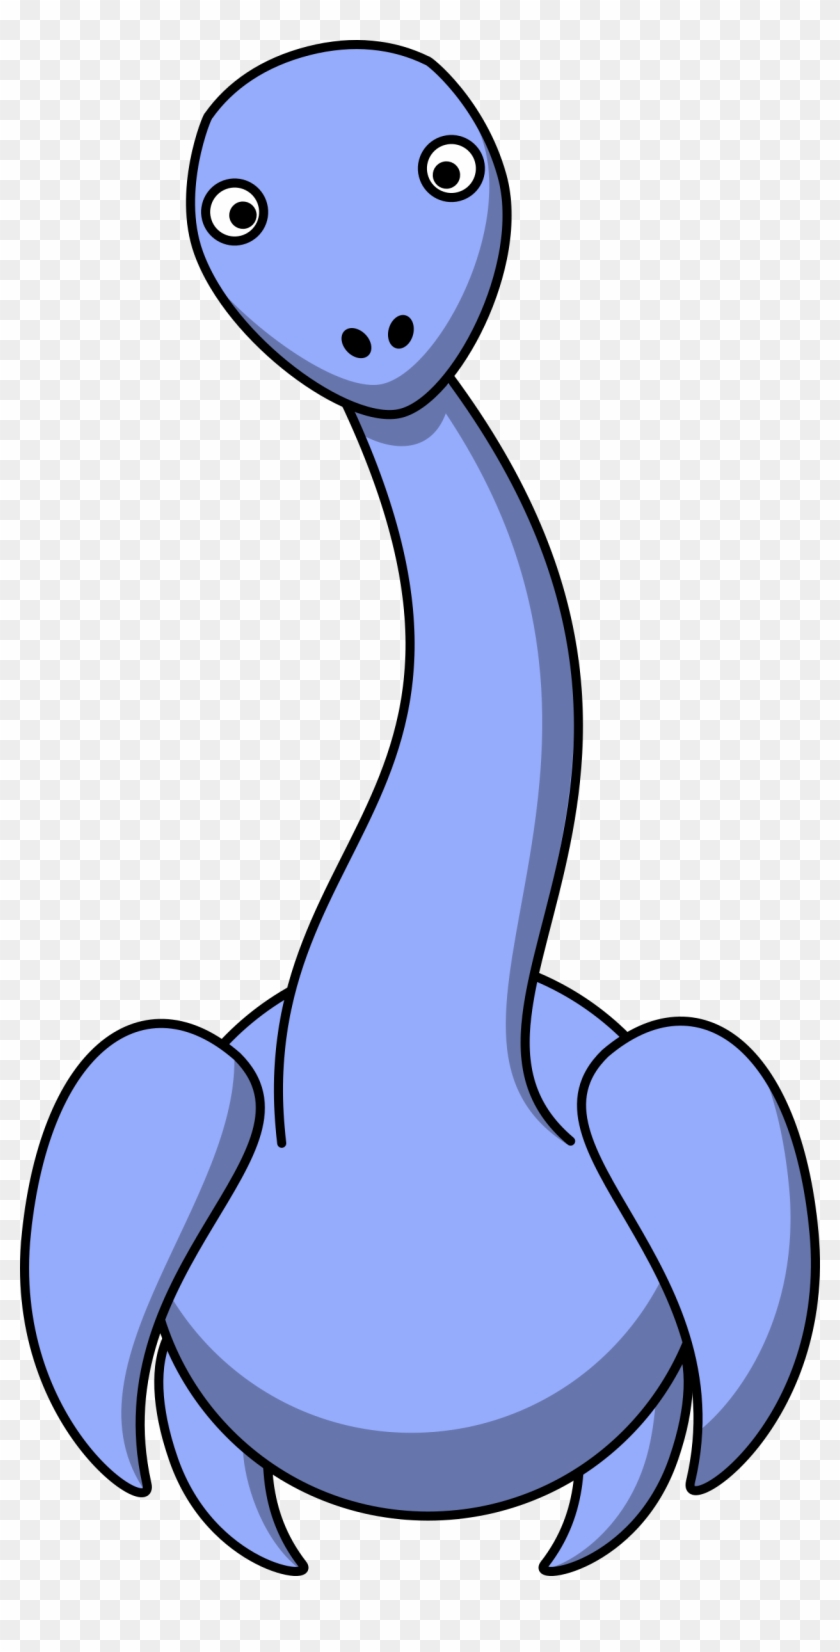 Free To Use Public Domain Dinosaur Clip Art - Loch Ness Monster Cartoon Png #193041